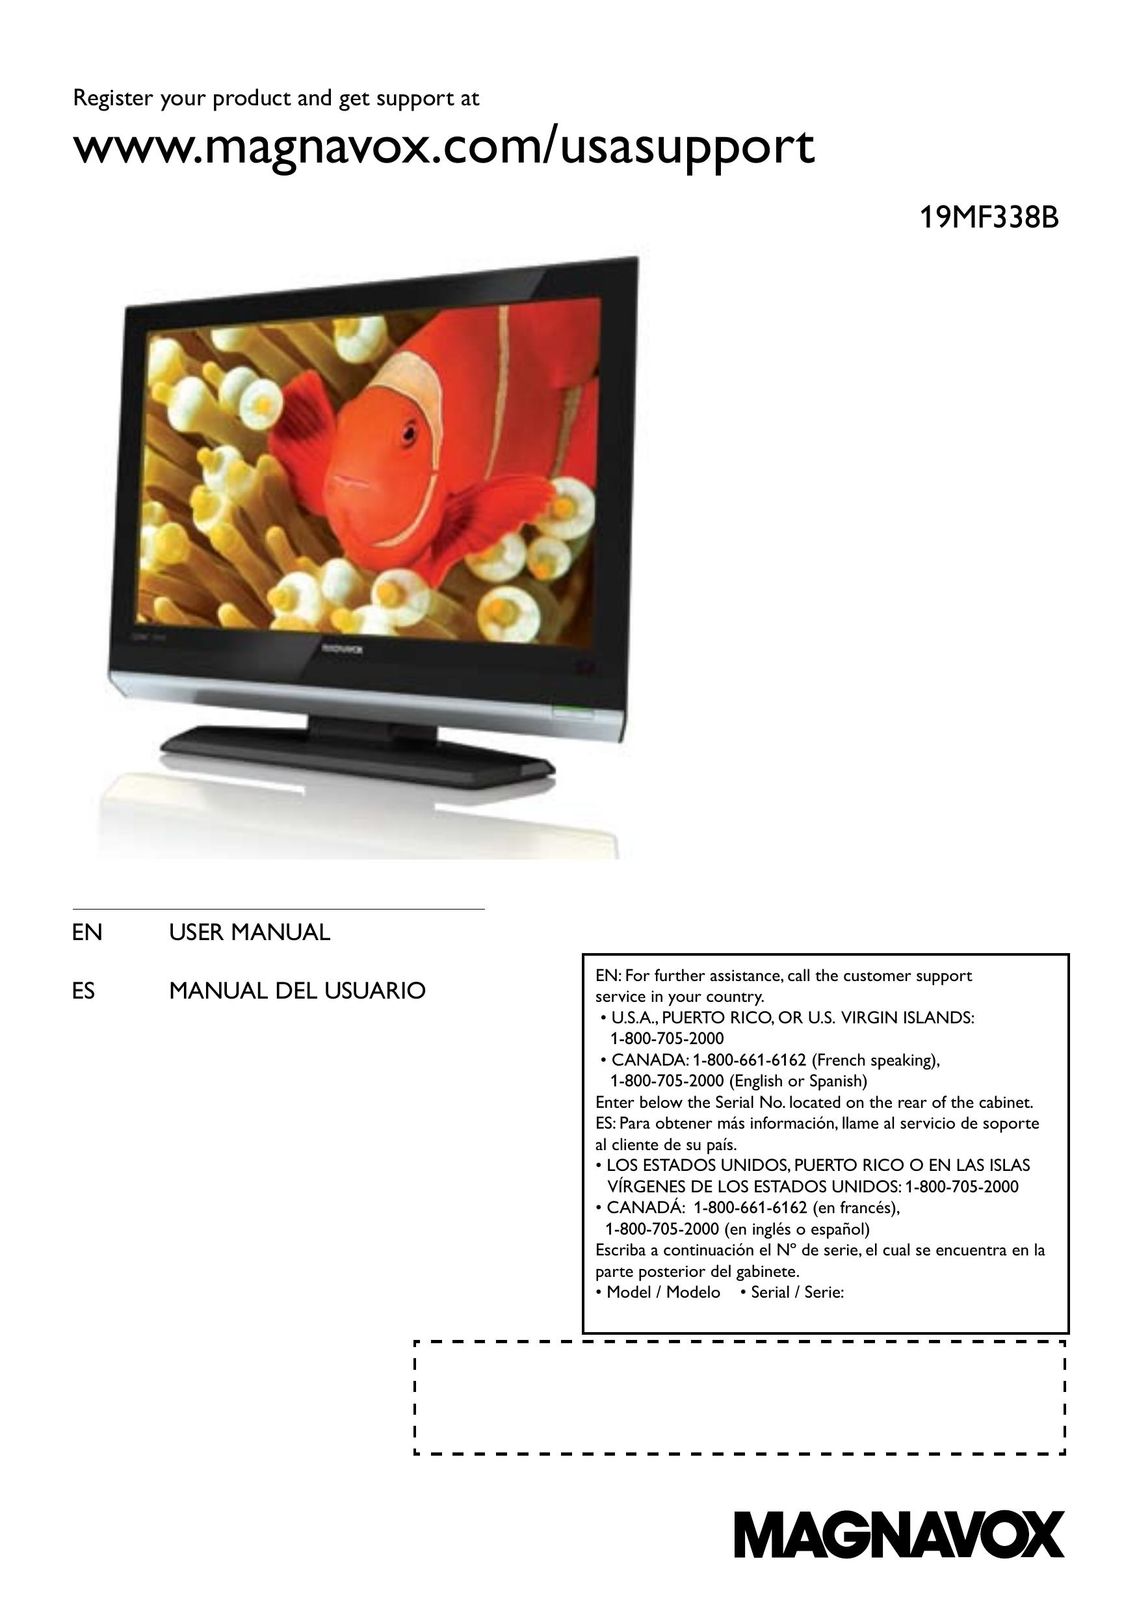 Magnavox 19MF338B Flat Panel Television User Manual